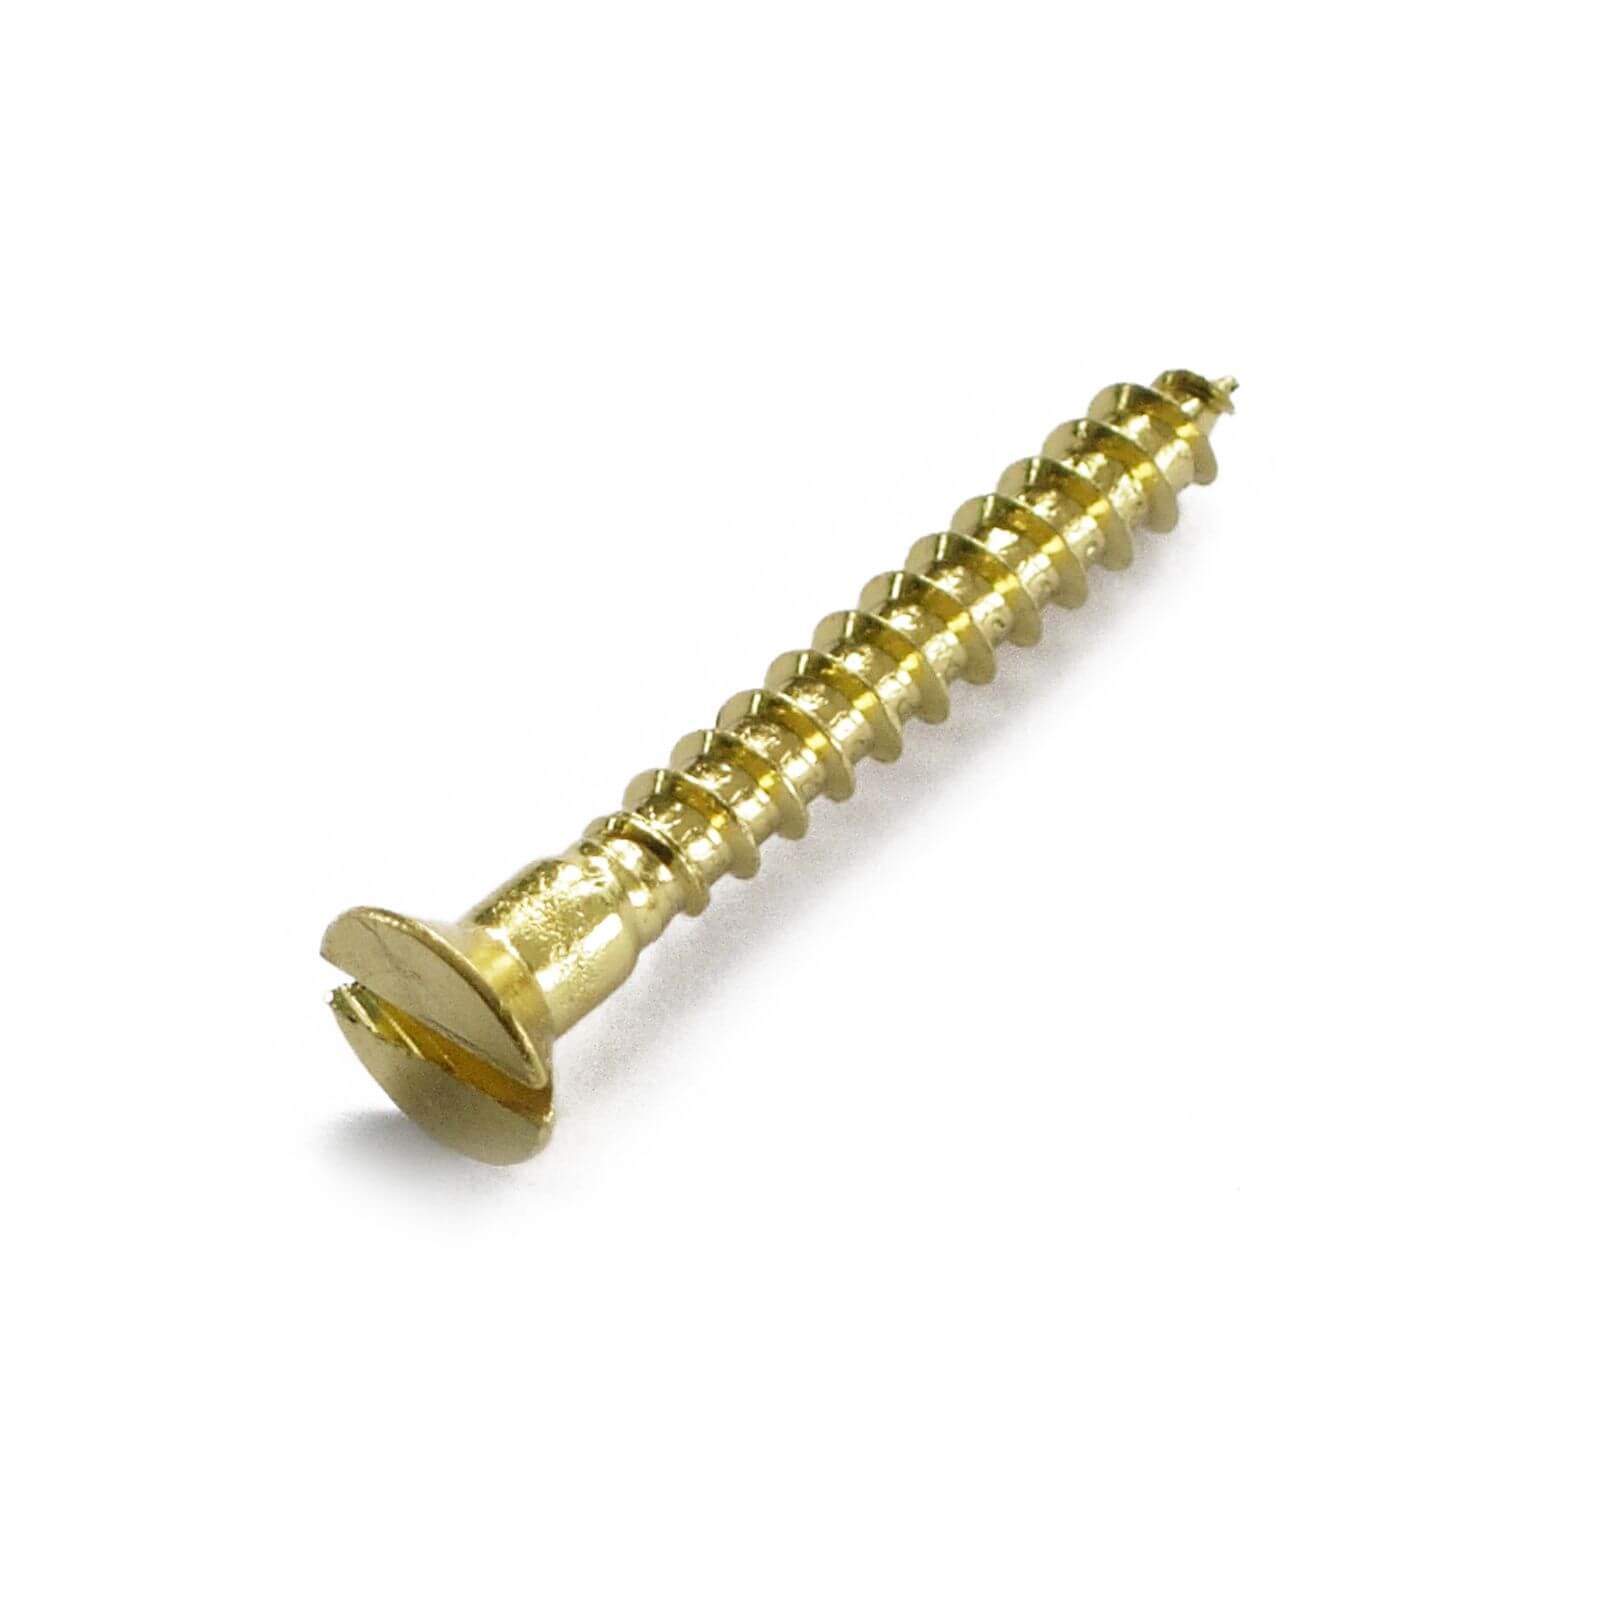 Wood Screw - Countersunk - Brass - 4 x 30mm - 10 Pack